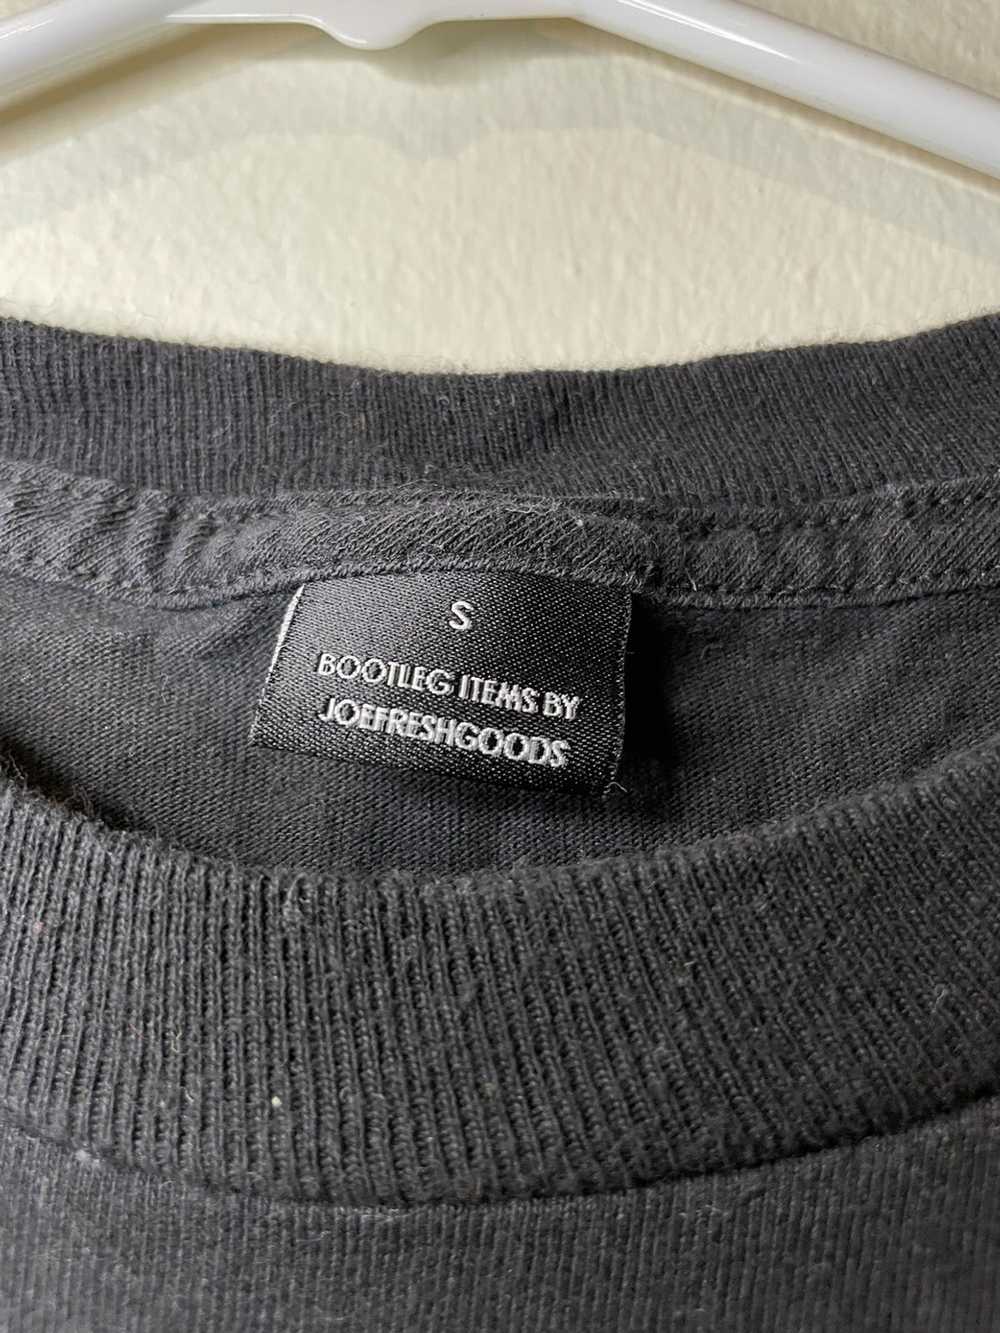 Streetwear Bootleg items by joefreshgoods BALENCI… - image 2